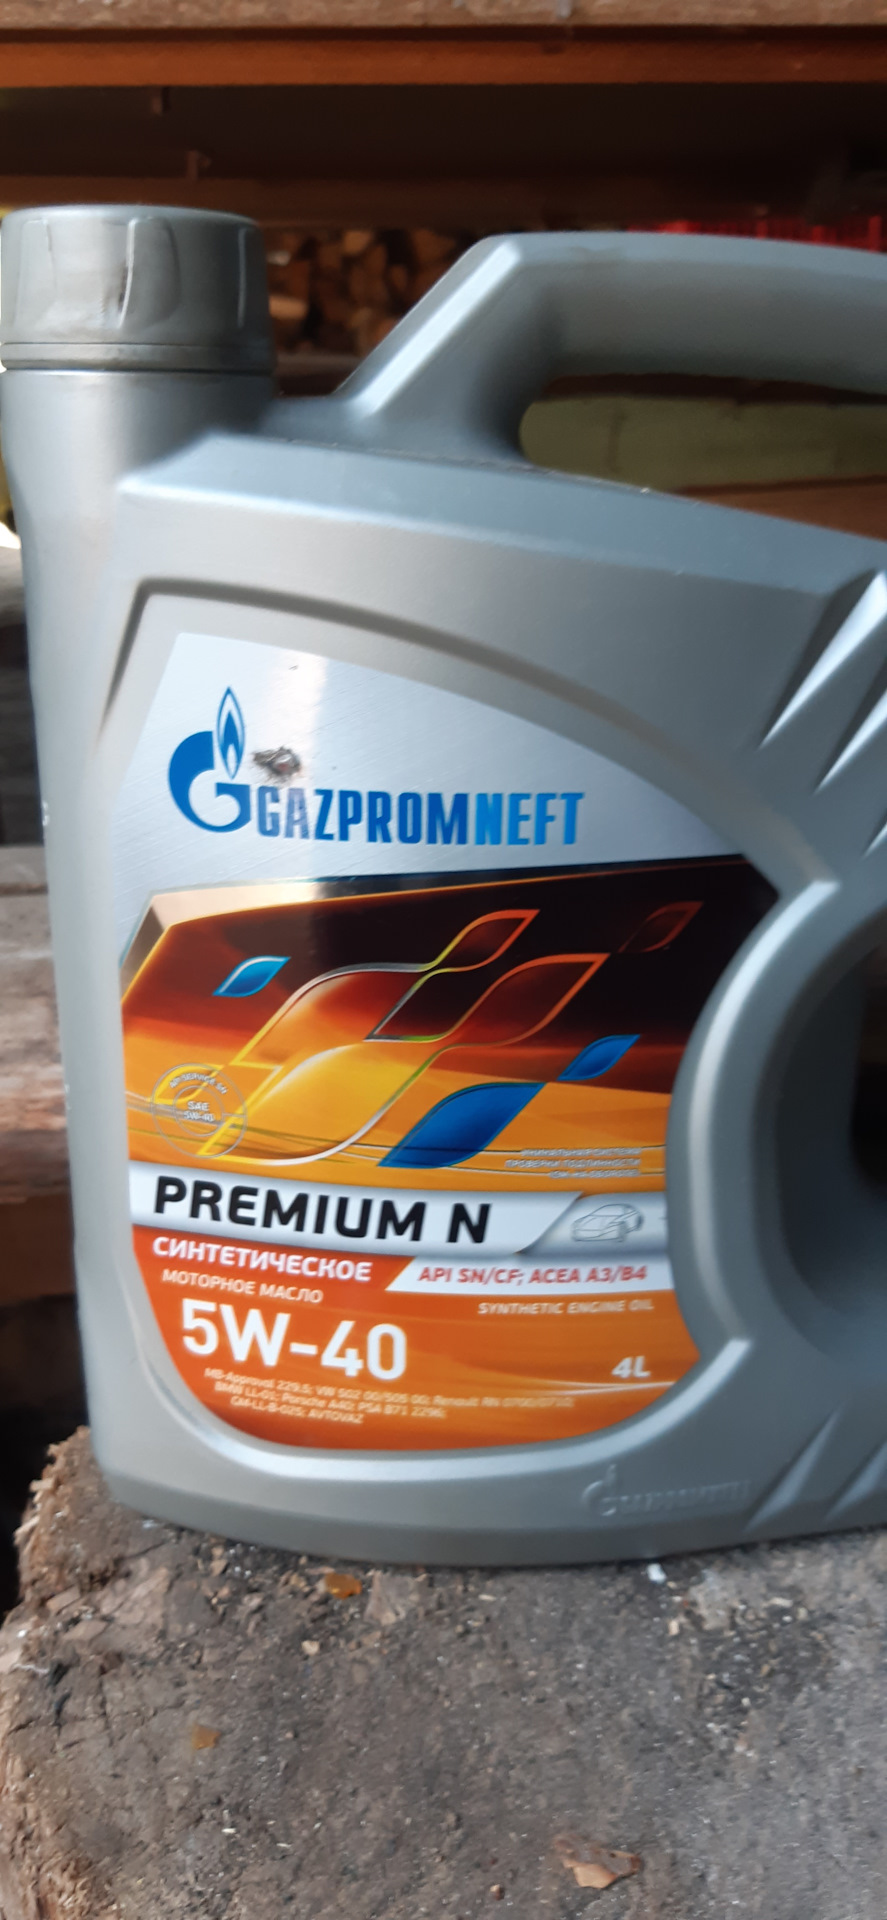 Масло газпромнефть premium n 5w40. Gazpromneft Premium n 5w-40. Масло трансмиссионное Газпромнефть Drive 2.